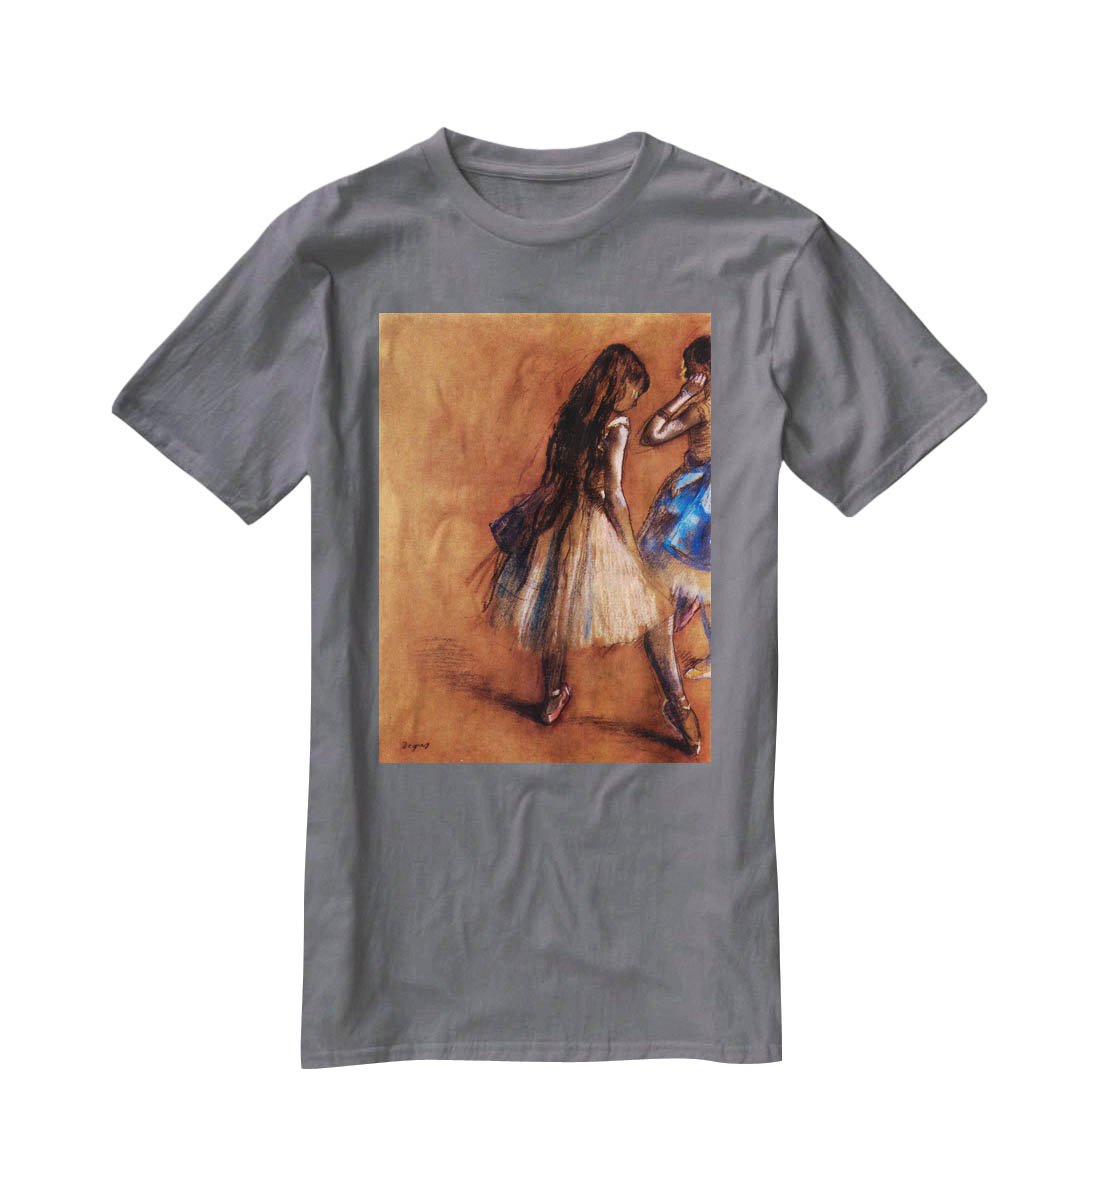 Two dancers 1 by Degas T-Shirt - Canvas Art Rocks - 3